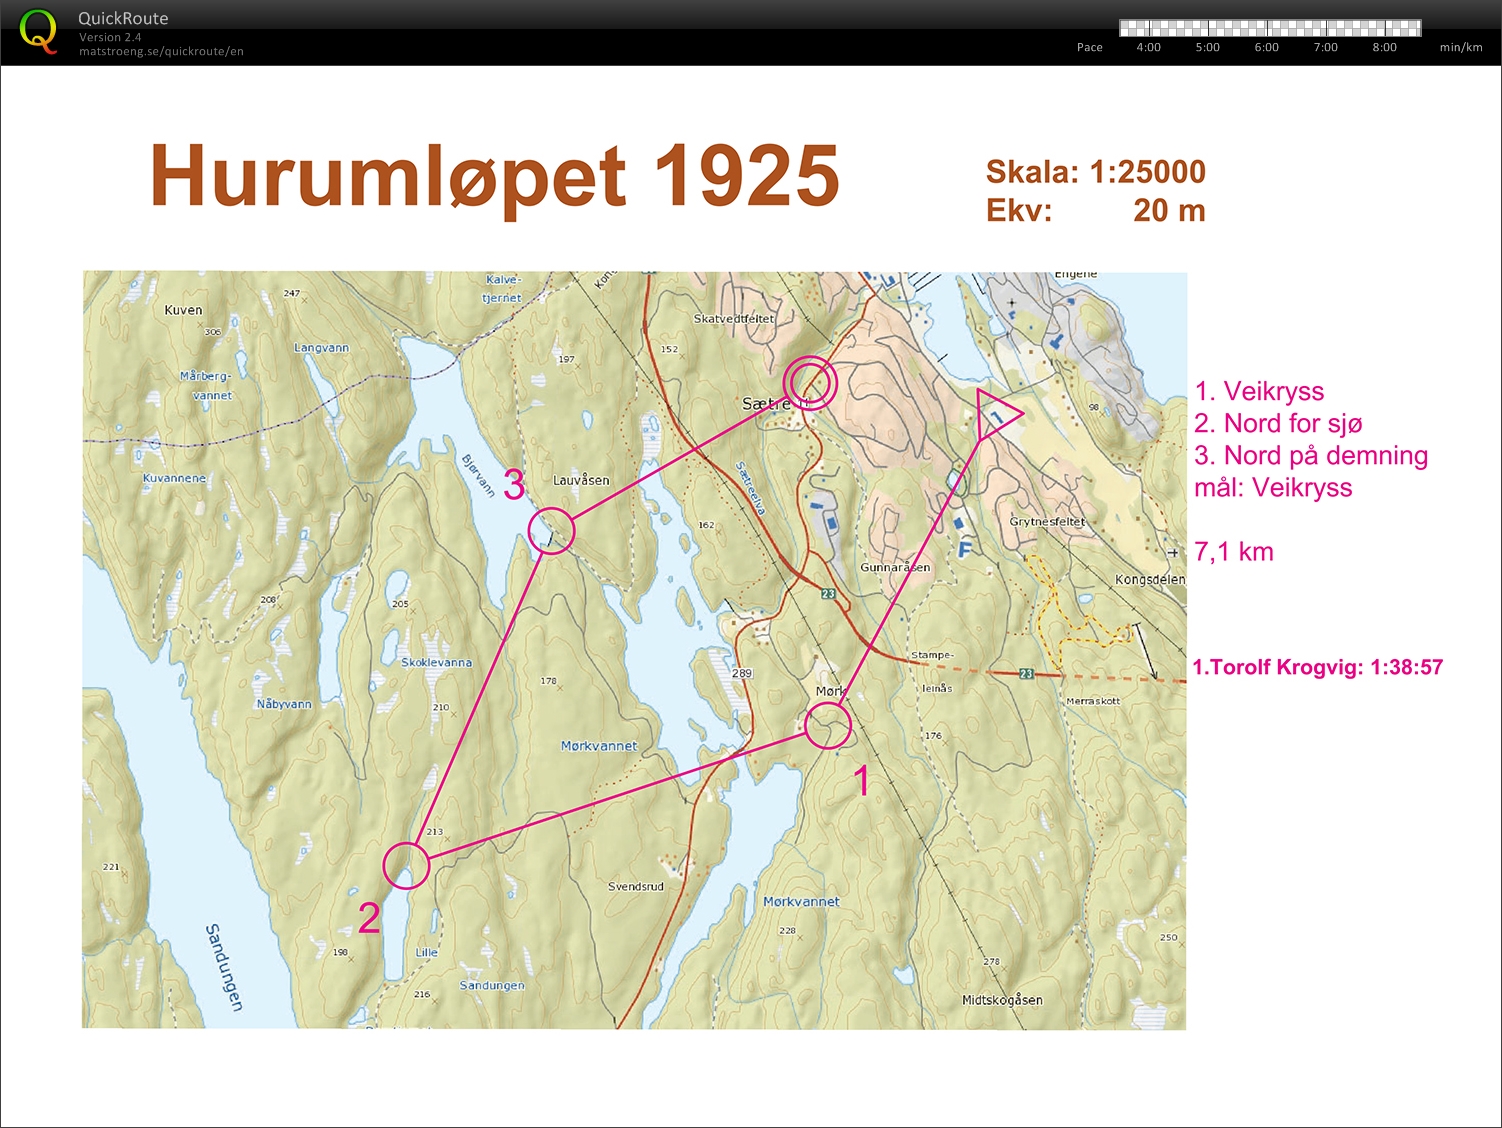 Hurumløpet 1925, Rerun (14.05.2014)